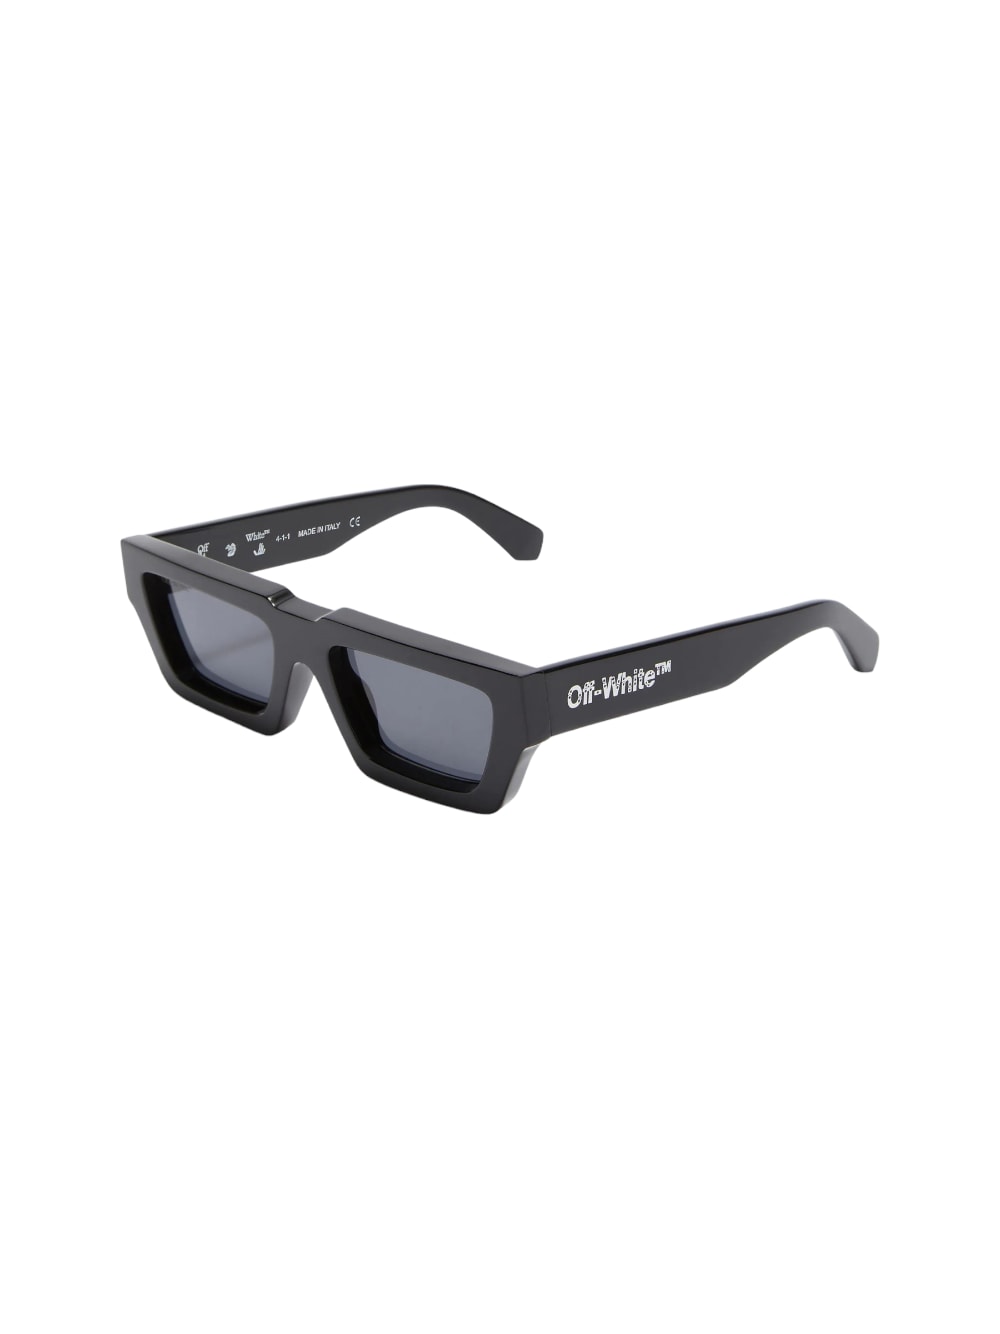 Off-white Manchester - Black Sunglasses